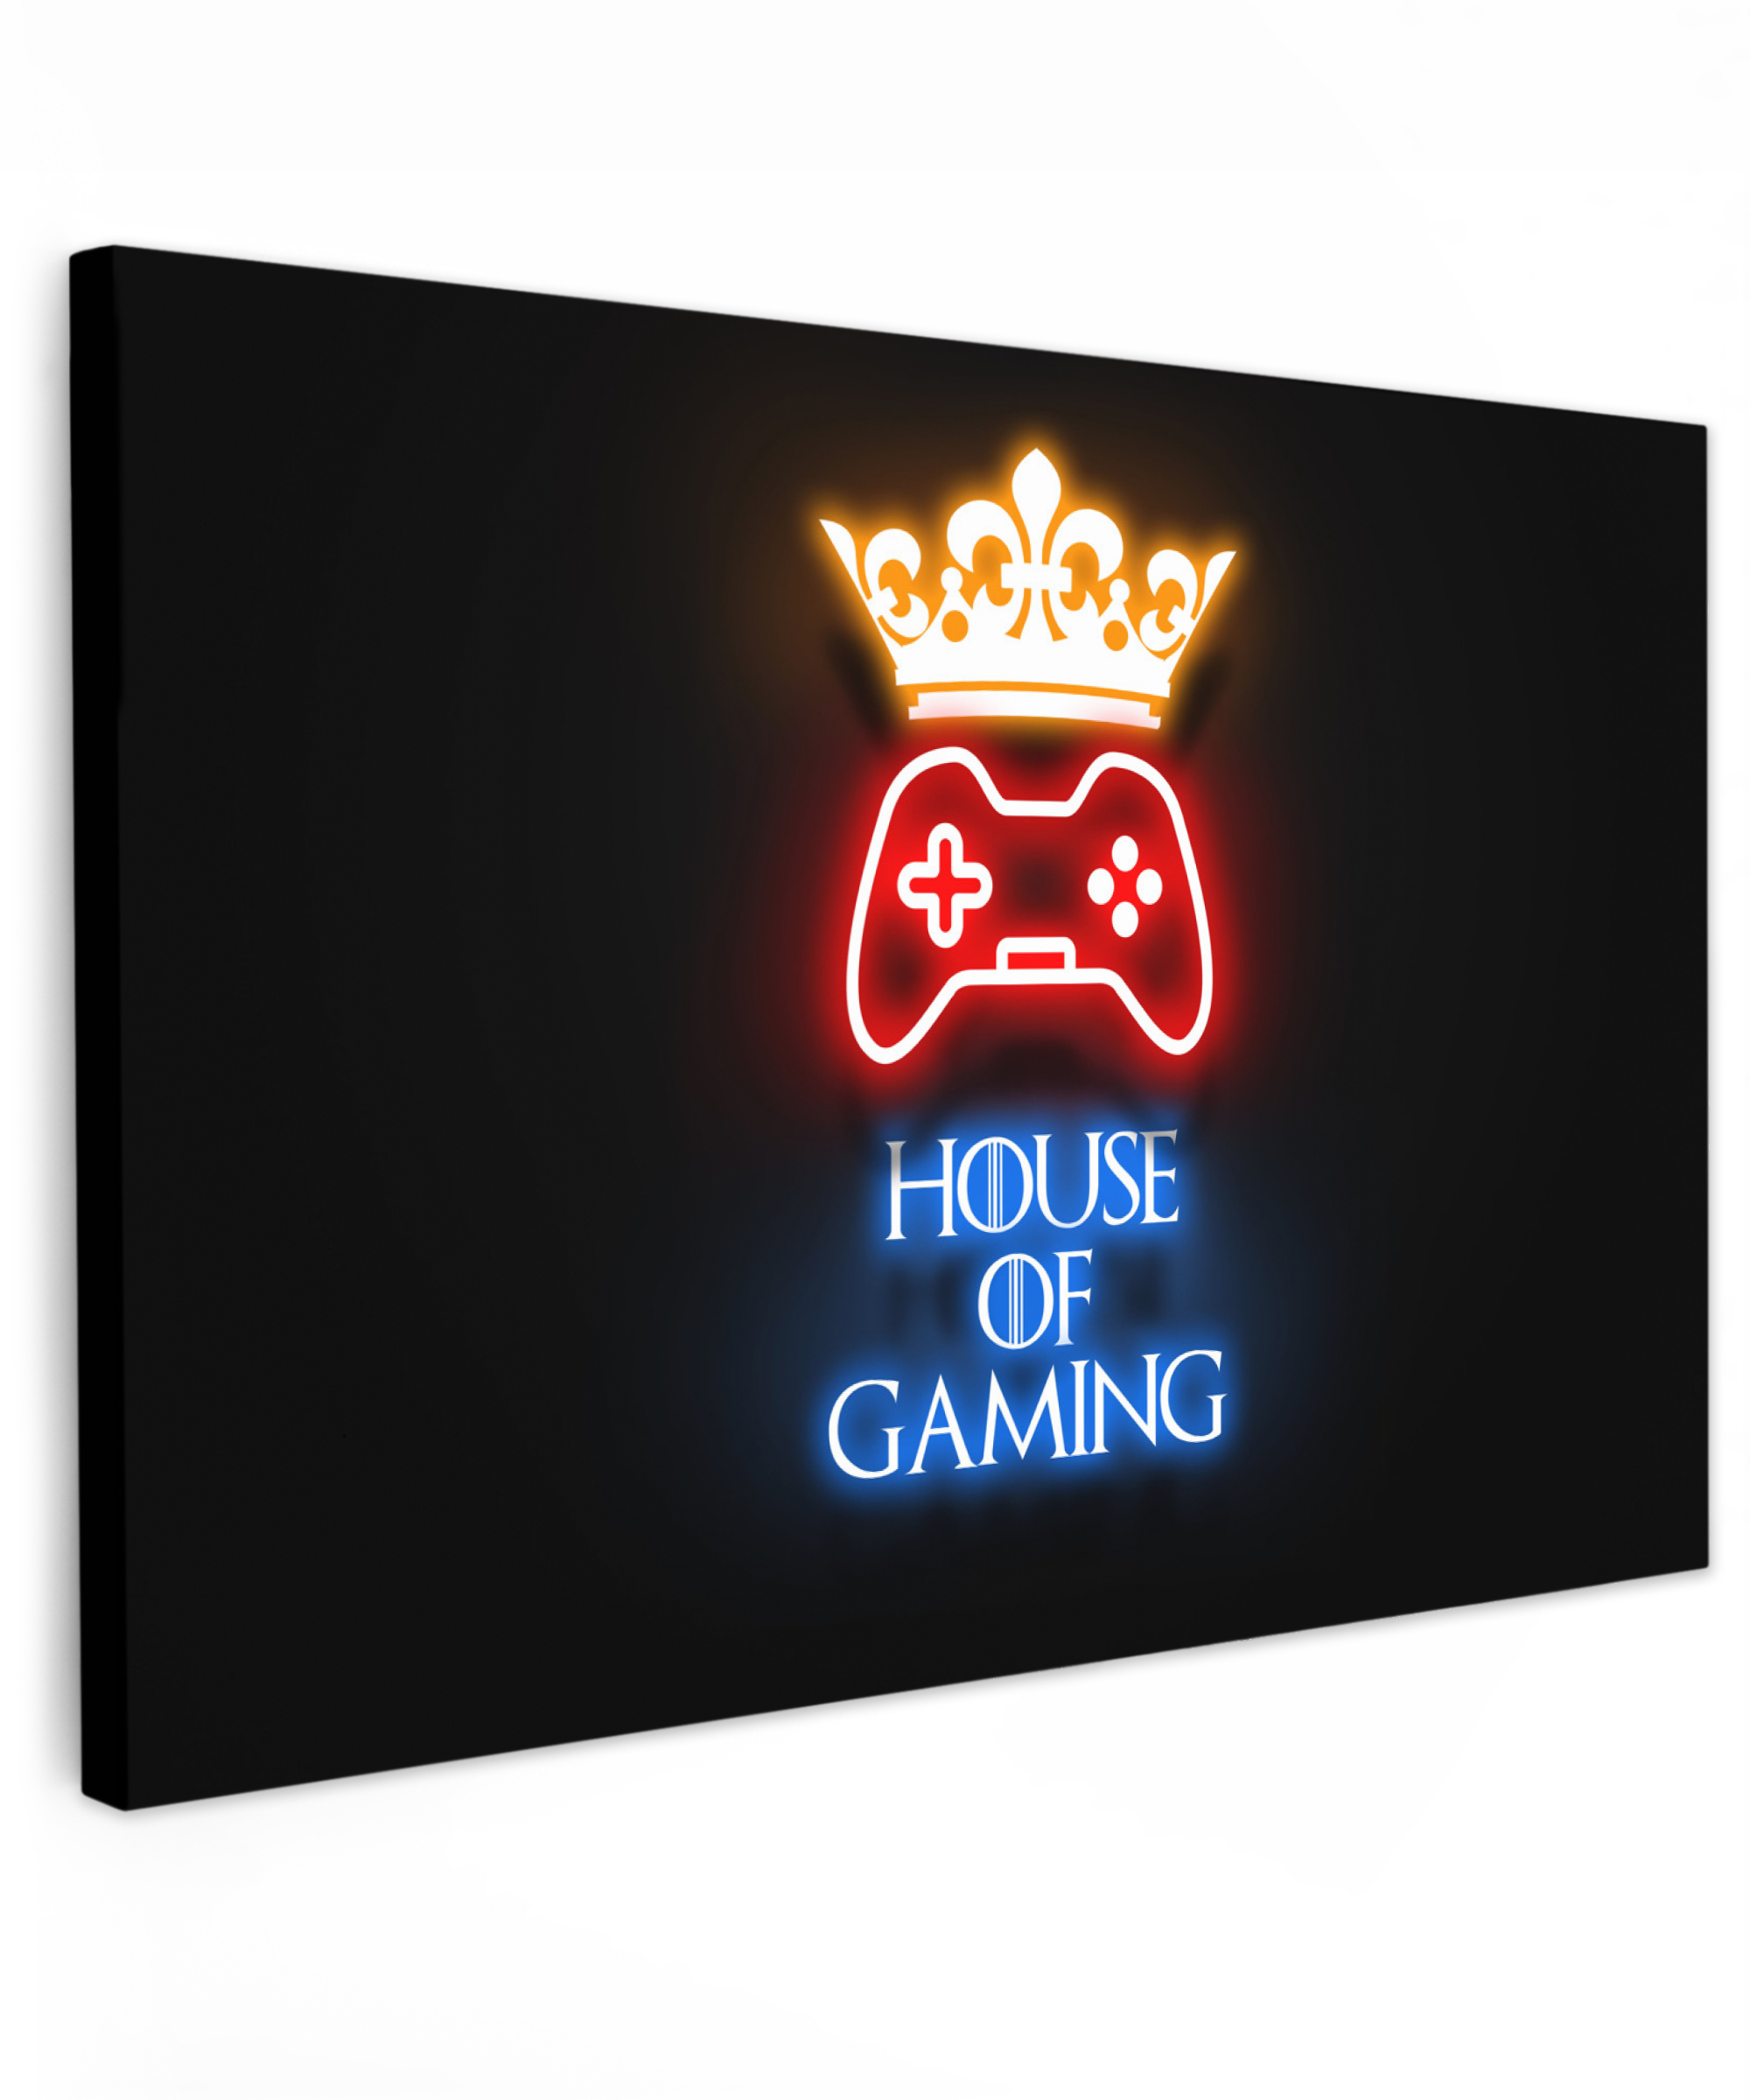 Canvas schilderij - Gaming quotes - Neon - House of gaming - Kroon - Tekst